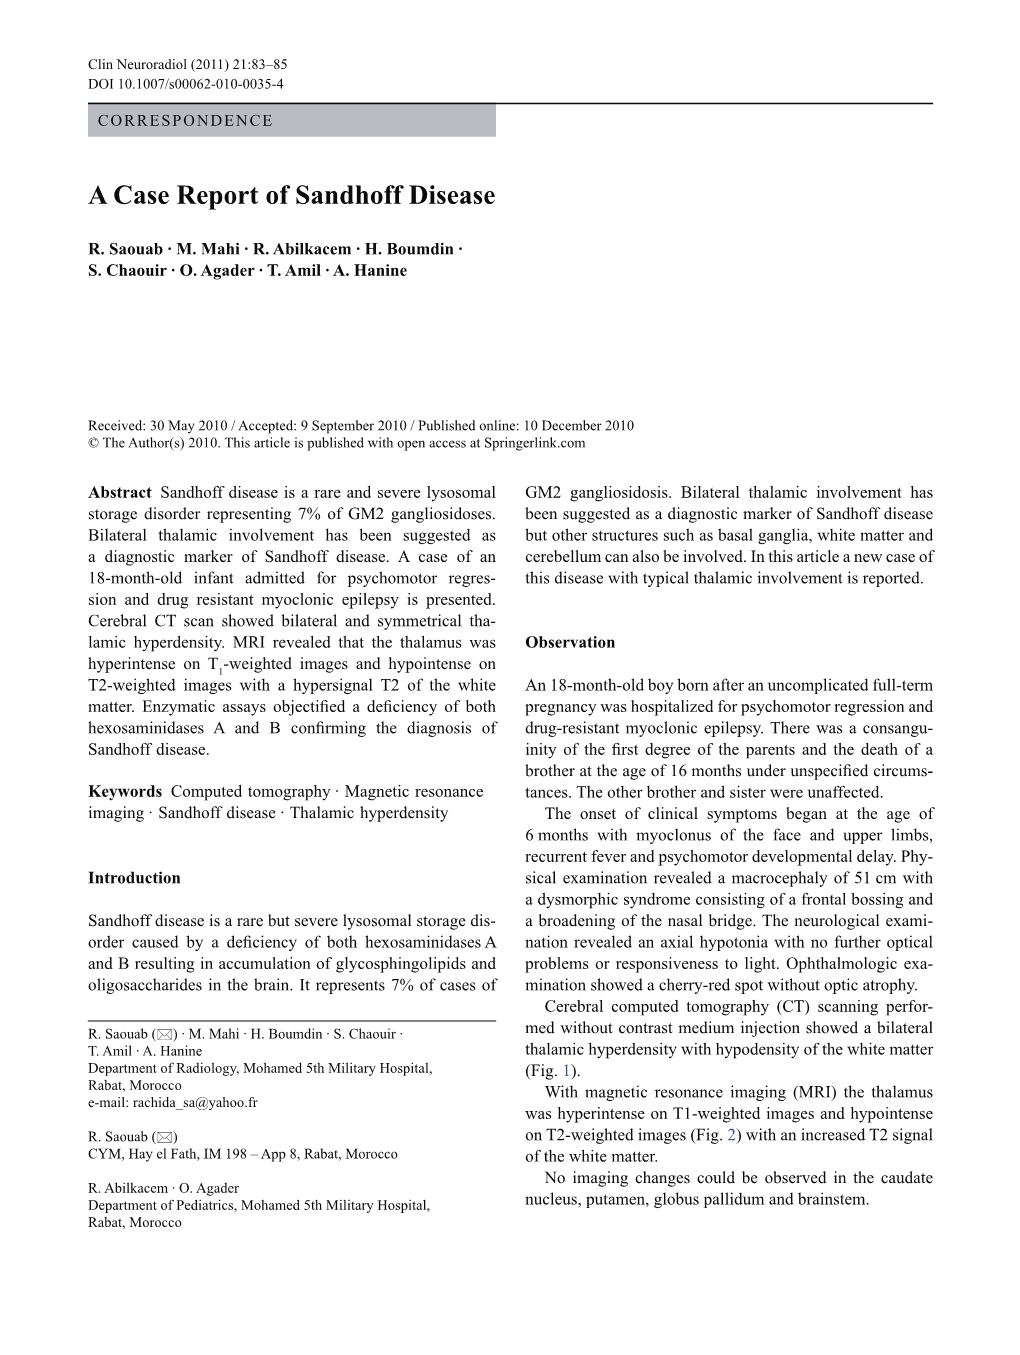 A Case Report of Sandhoff Disease